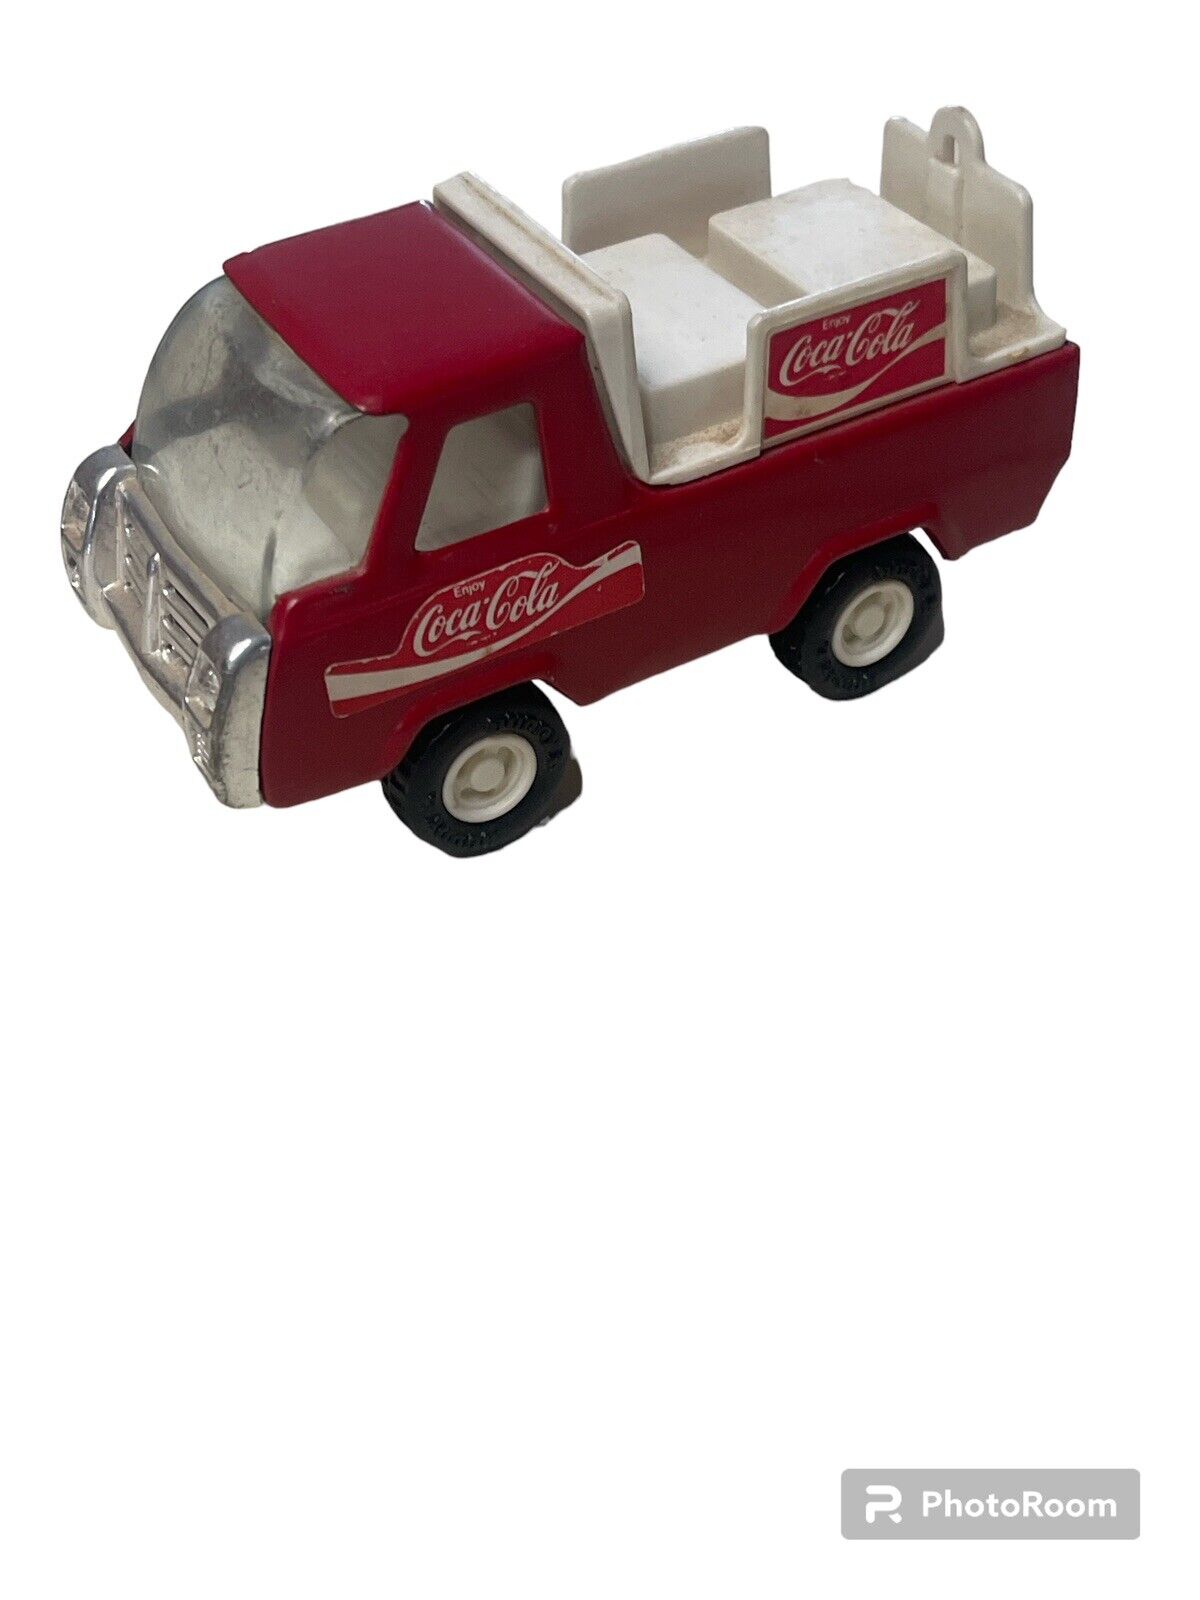 VTG Coca Cola Coke Buddy L 1980's Metal Pressed Steel Delivery Truck No Crates